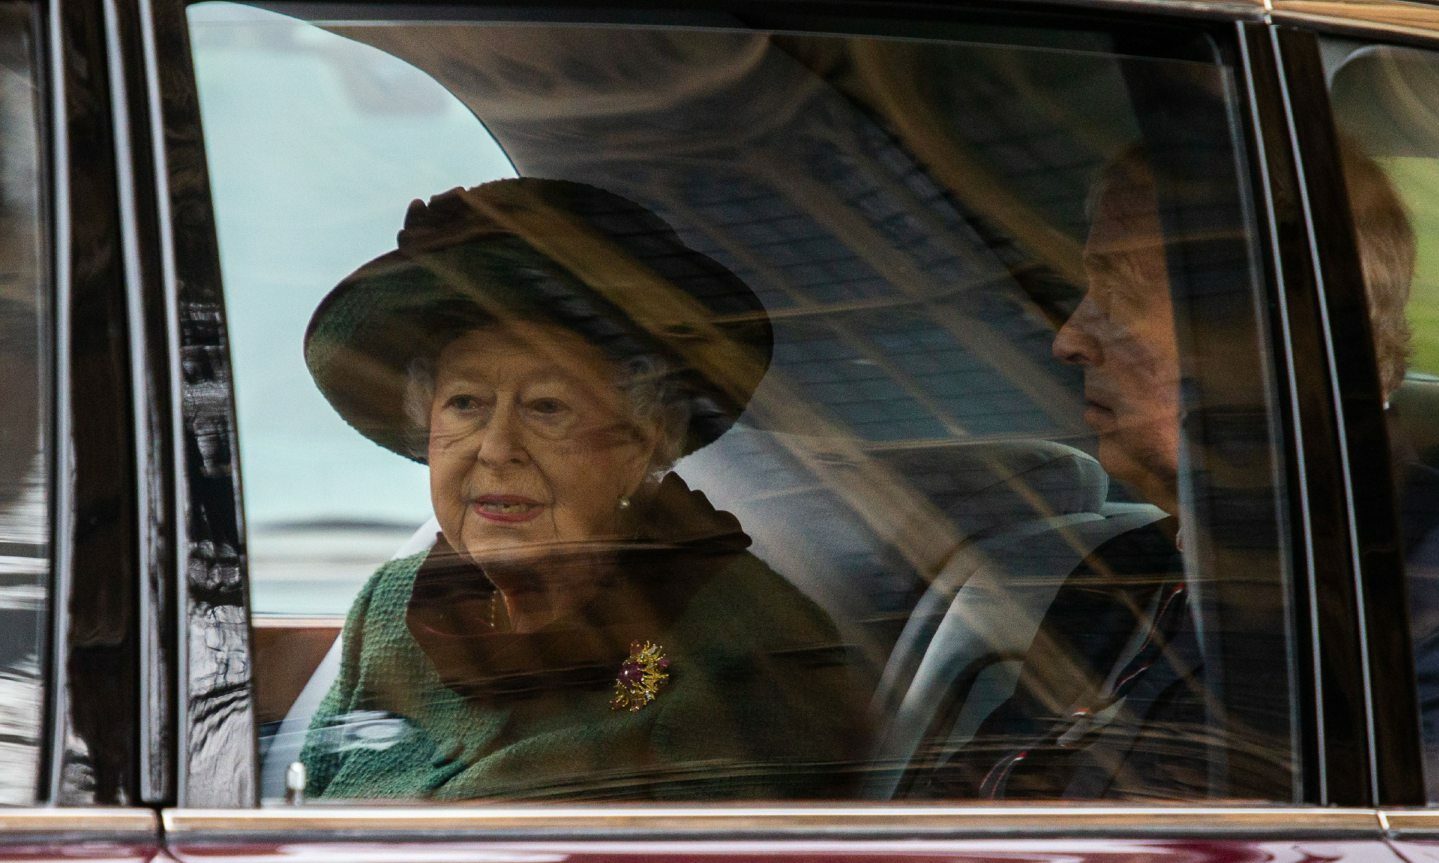 Queen Elizabeth II and Prince Andrew leave memorial service for the Duke of Edinburgh. Photo by Tayfun Salci/ZUMA Press Wire/Shutterstock